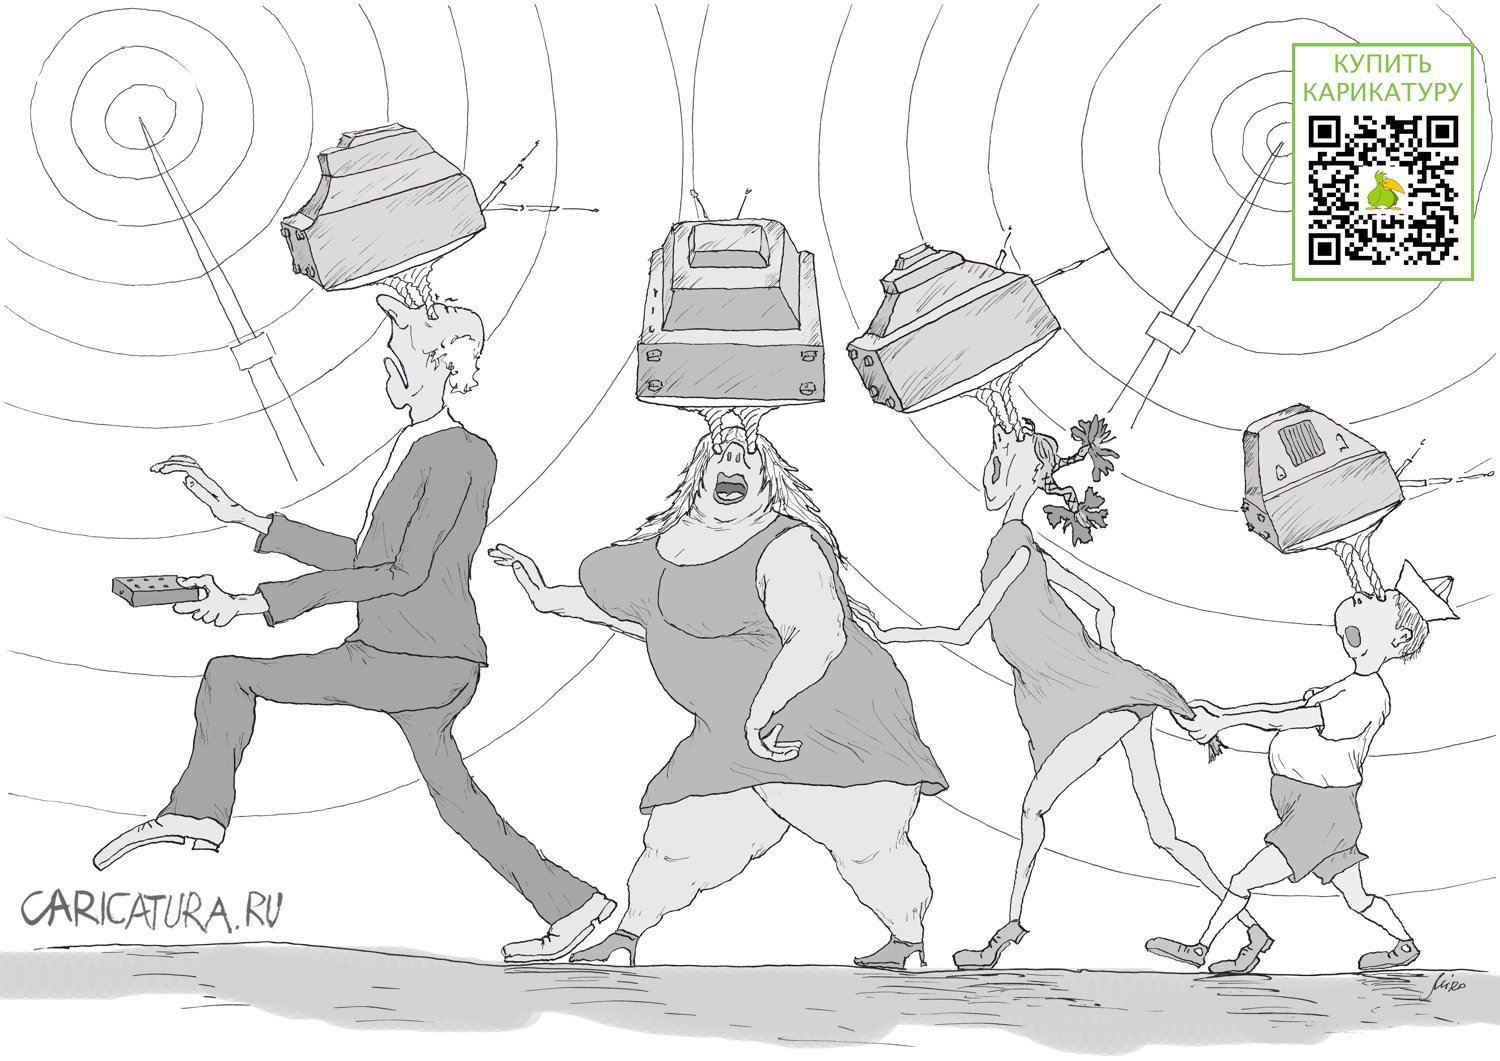 Карикатура "Познаём мир через призму телевизора", Игорь Мирошниченко